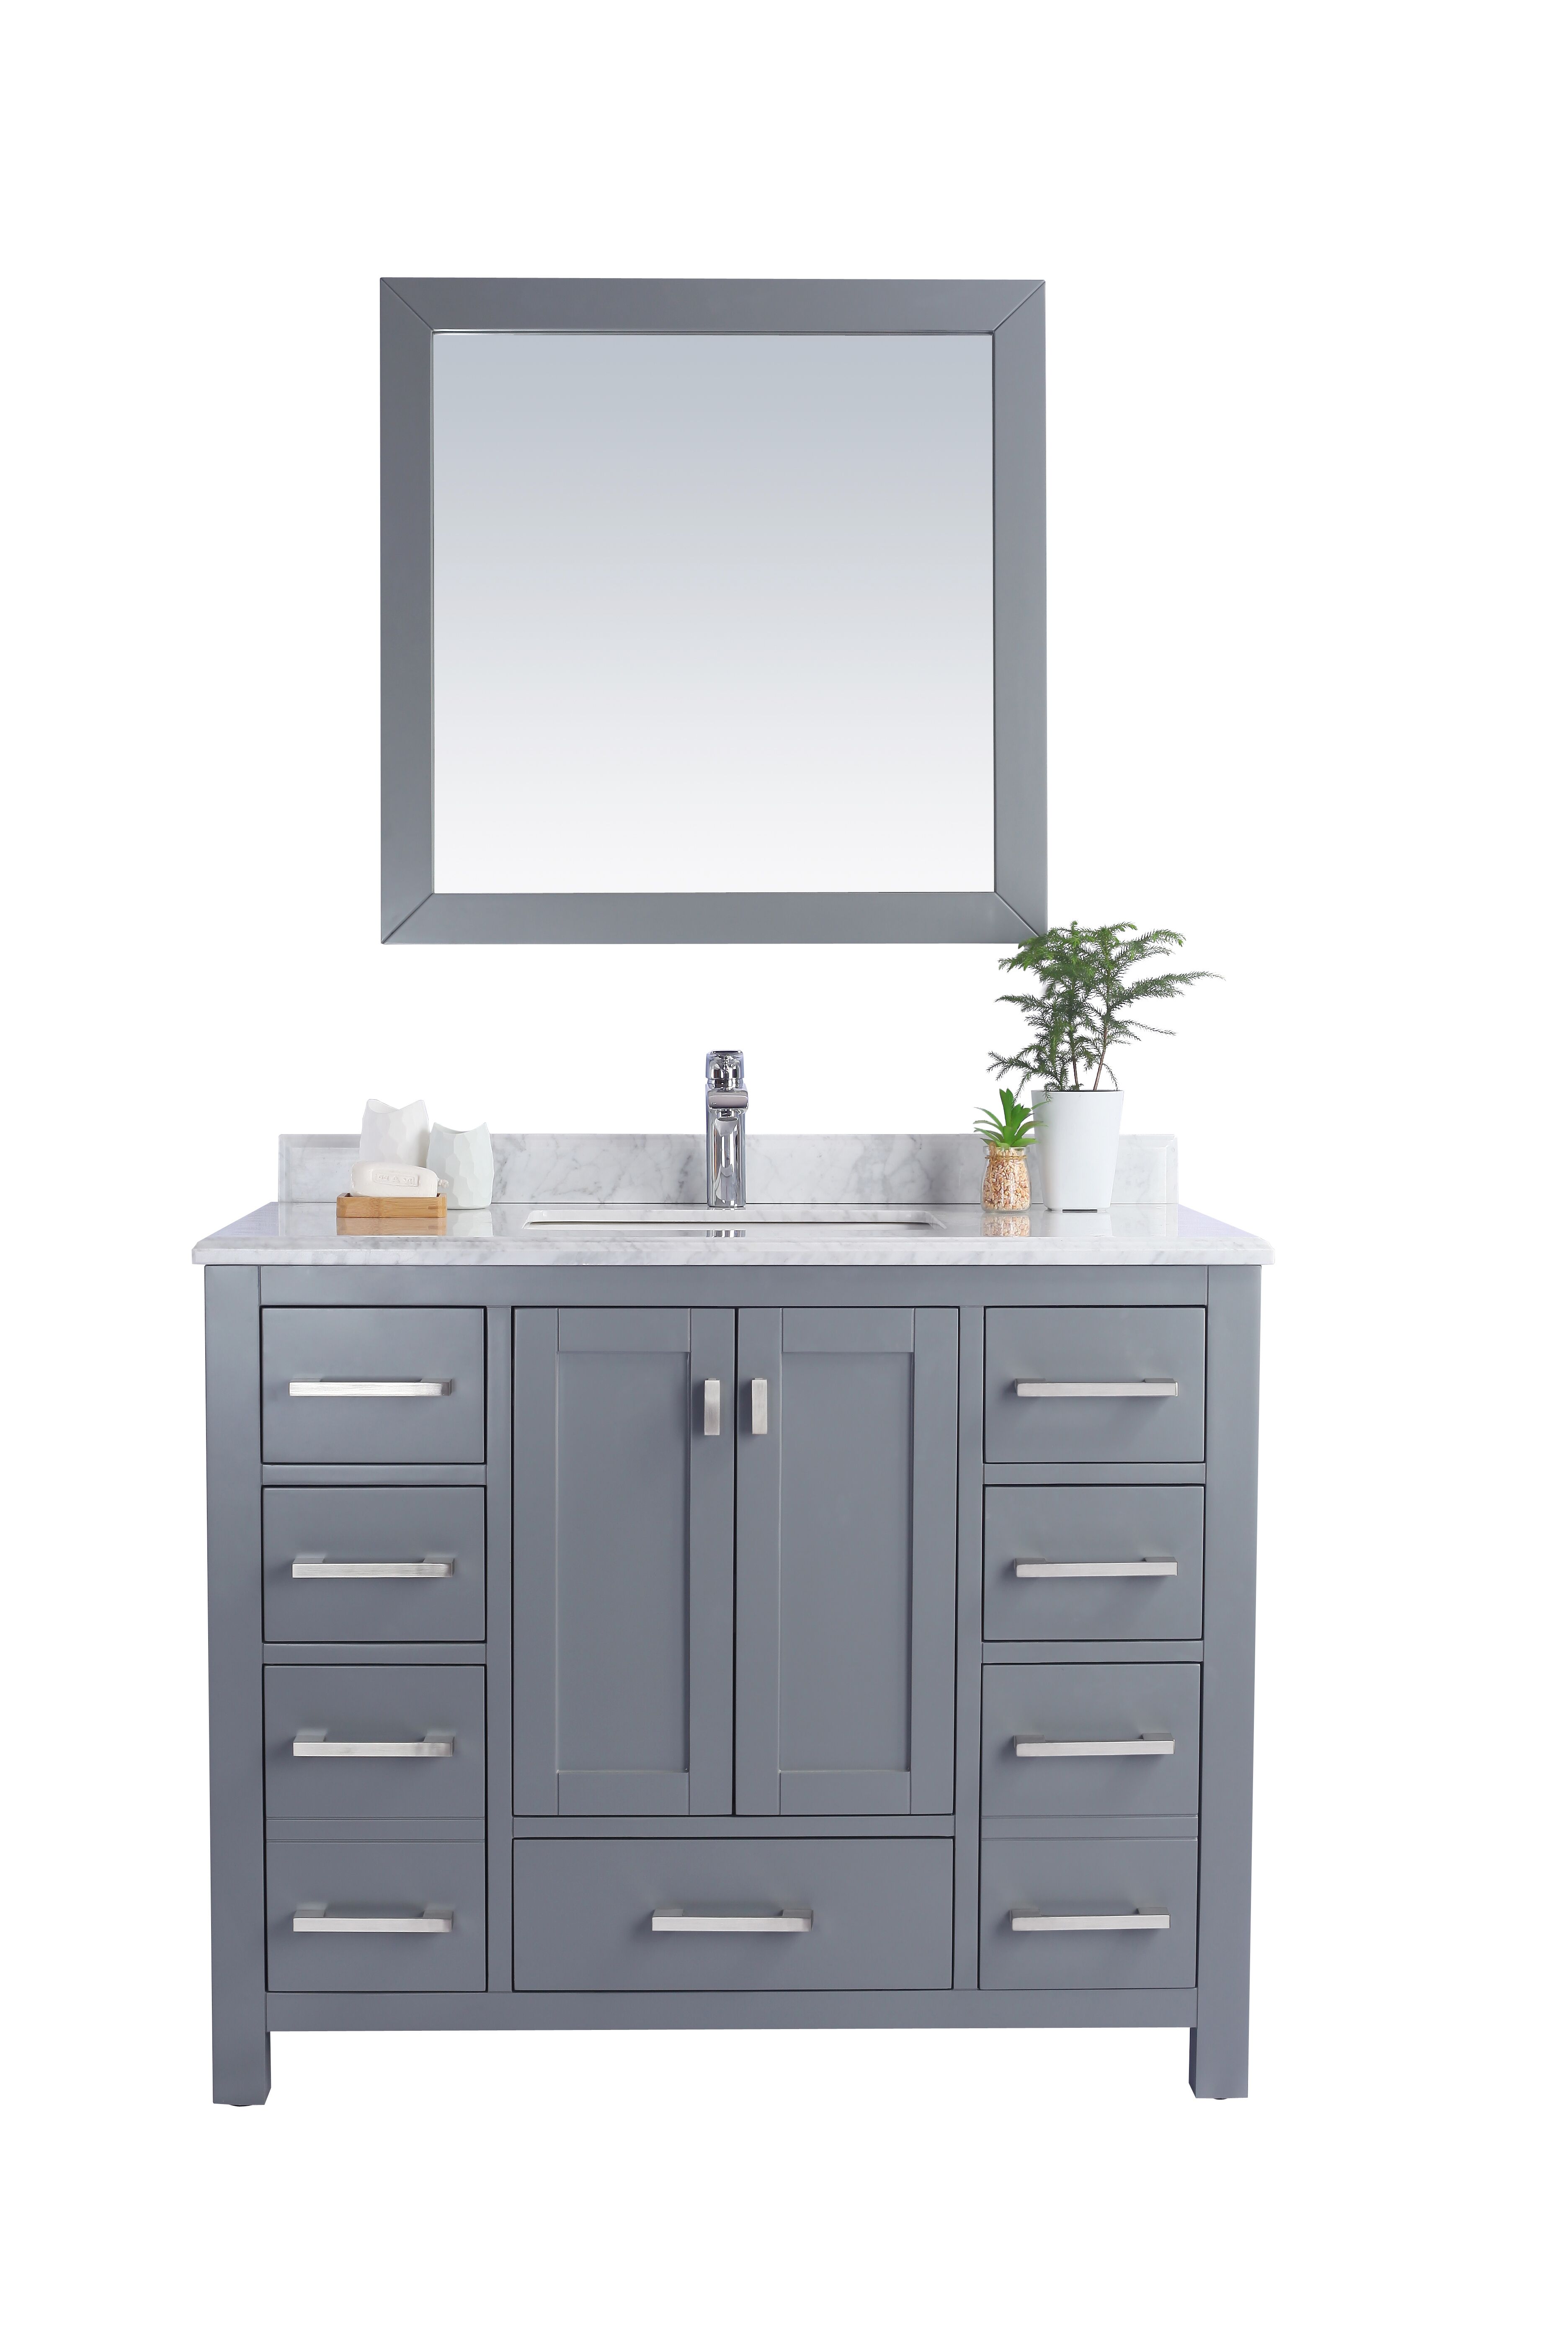 42" Single Sink Bathroom Vanity Cabinet + White Carrara Countertop with Mirror Options